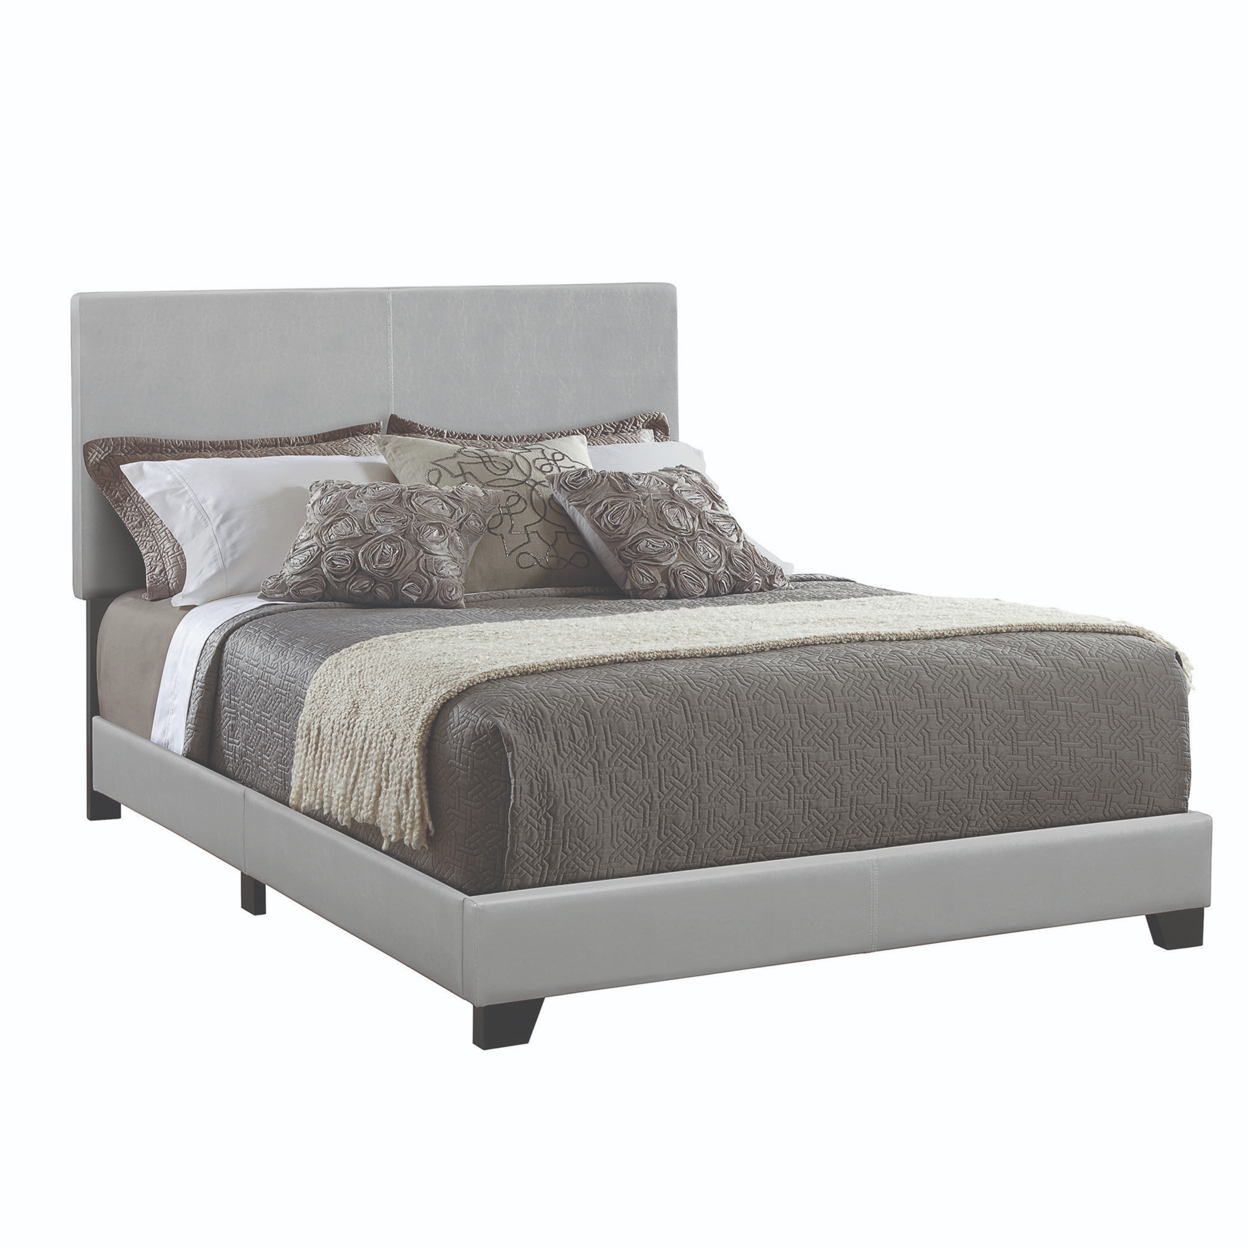 Leather Upholstered Full Size Platform Bed, Gray- Saltoro Sherpi